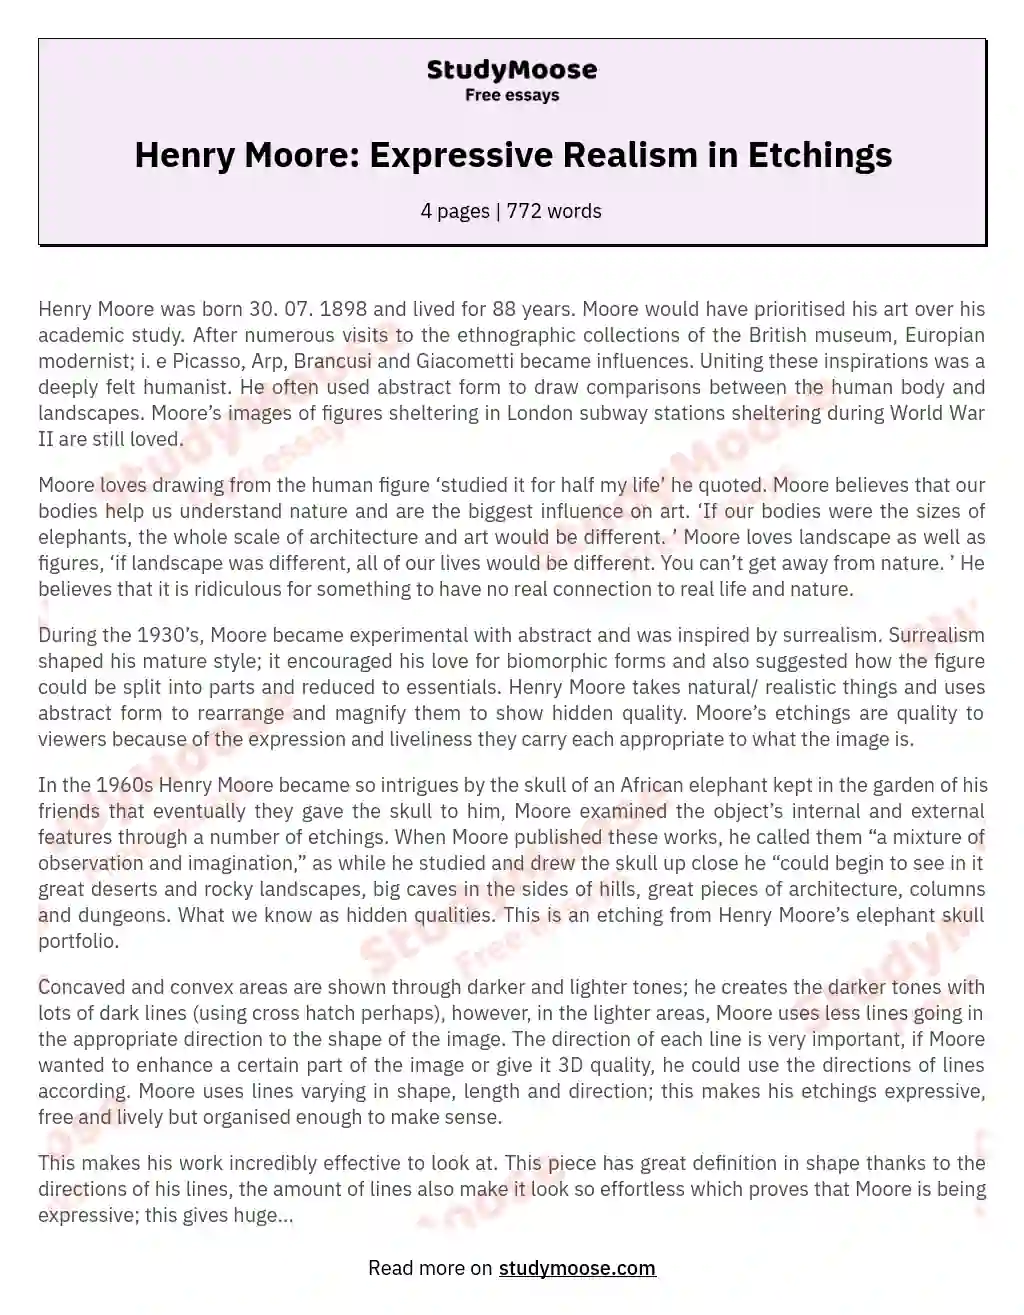 Henry Moore: Expressive Realism in Etchings essay